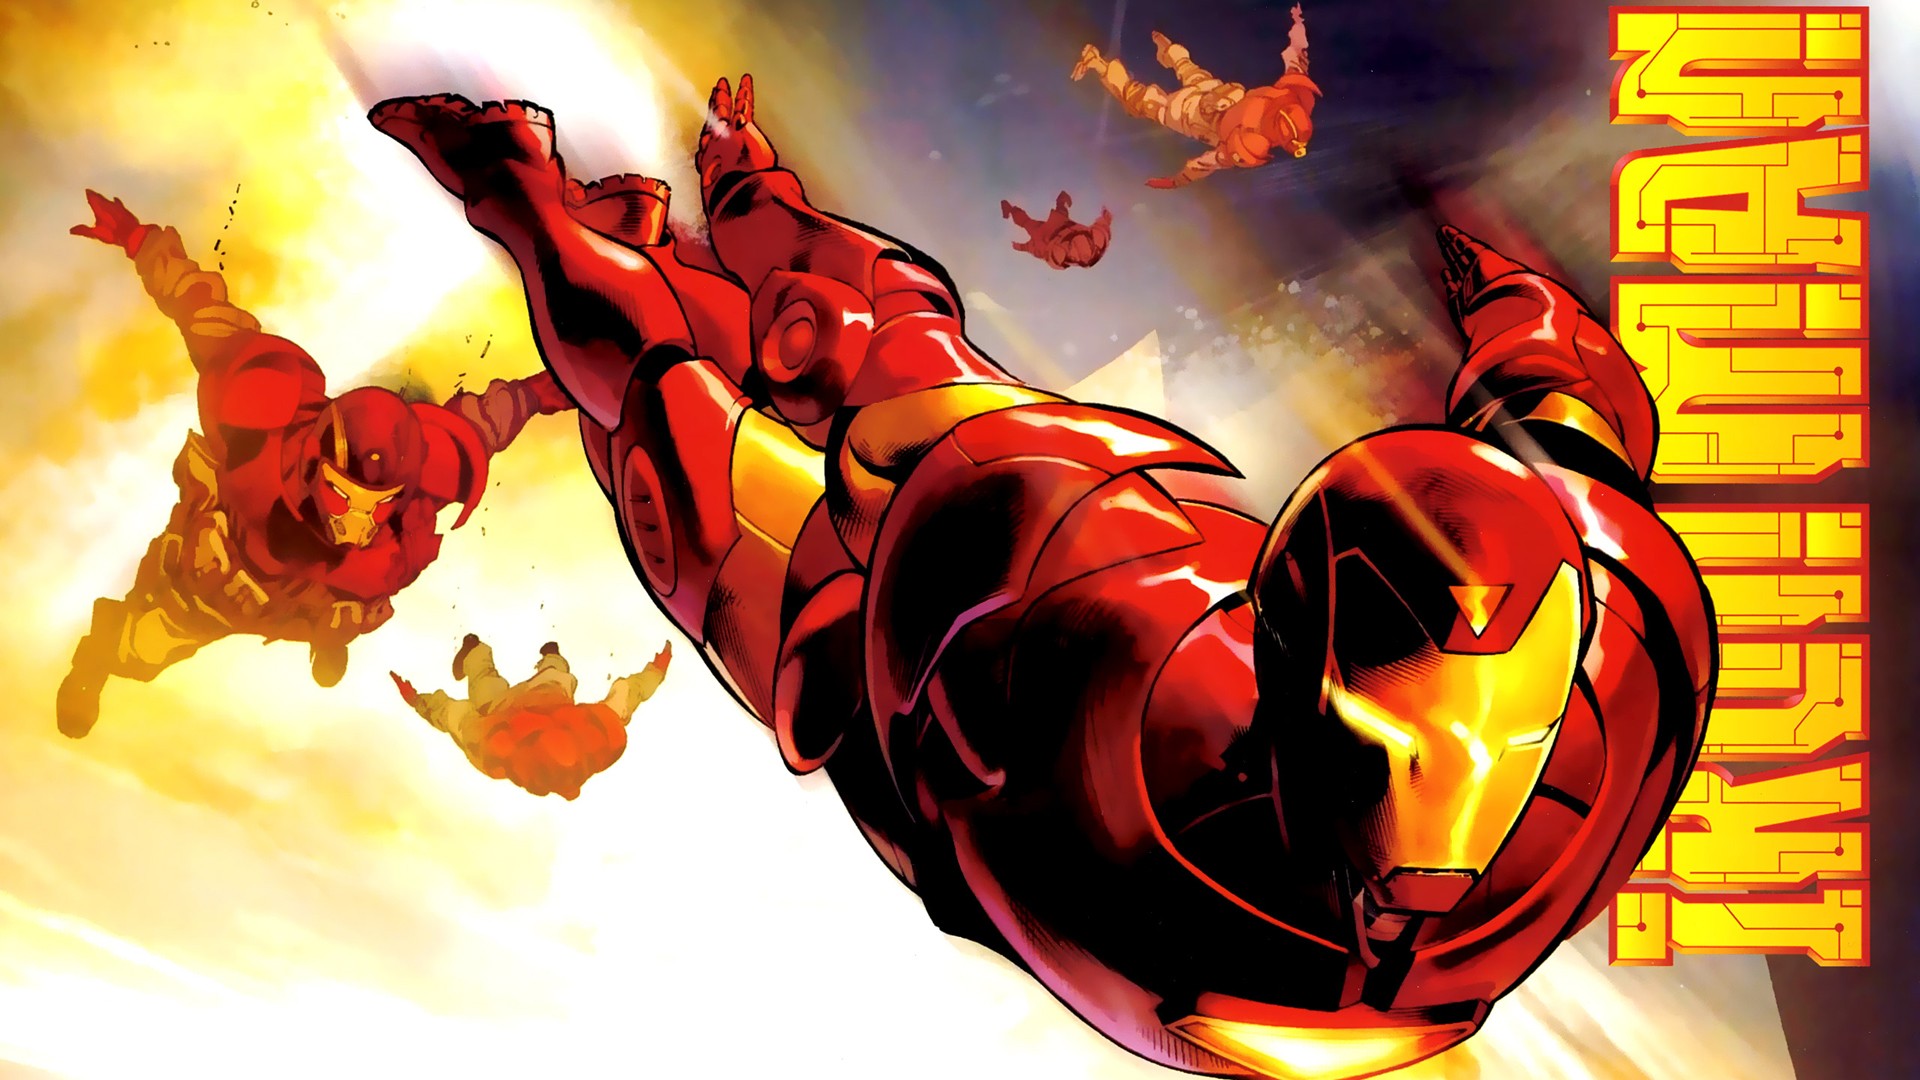 General 1920x1080 Iron Man Marvel Comics superhero comic art digital art